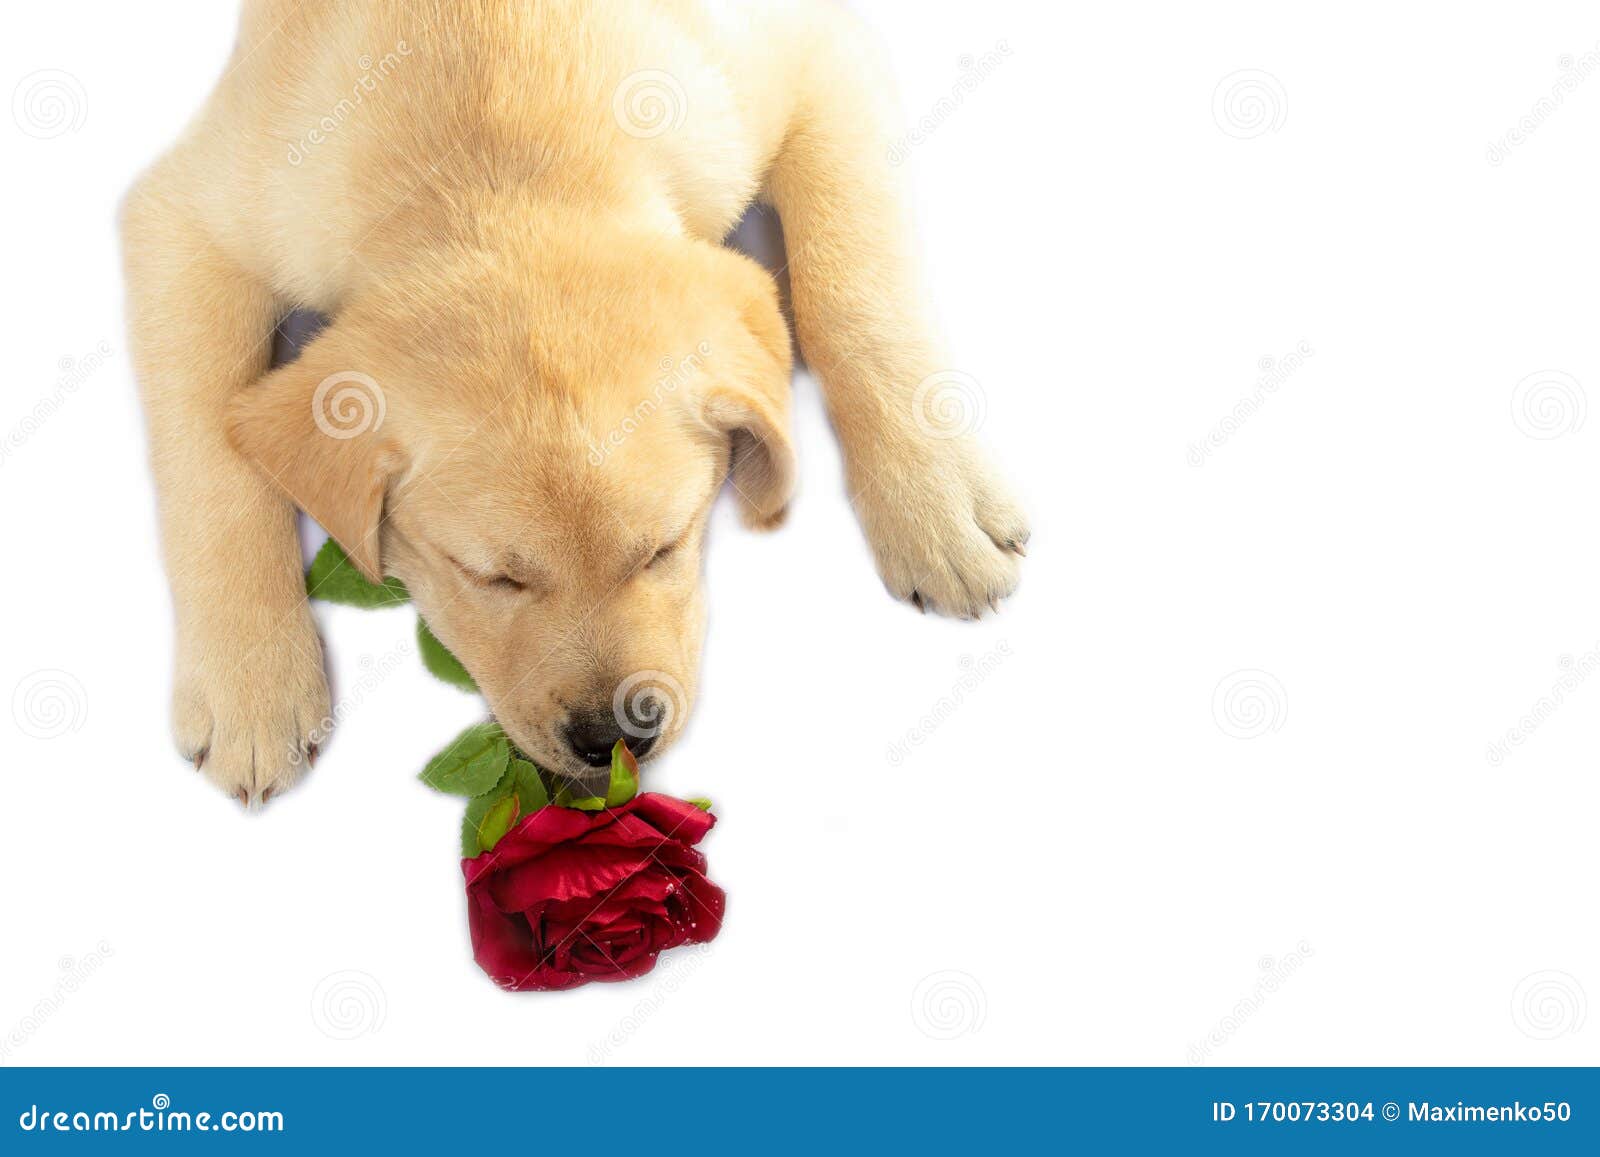 Labrador Retriever Dog with Rose. Top View Stock Photo - Image of ...